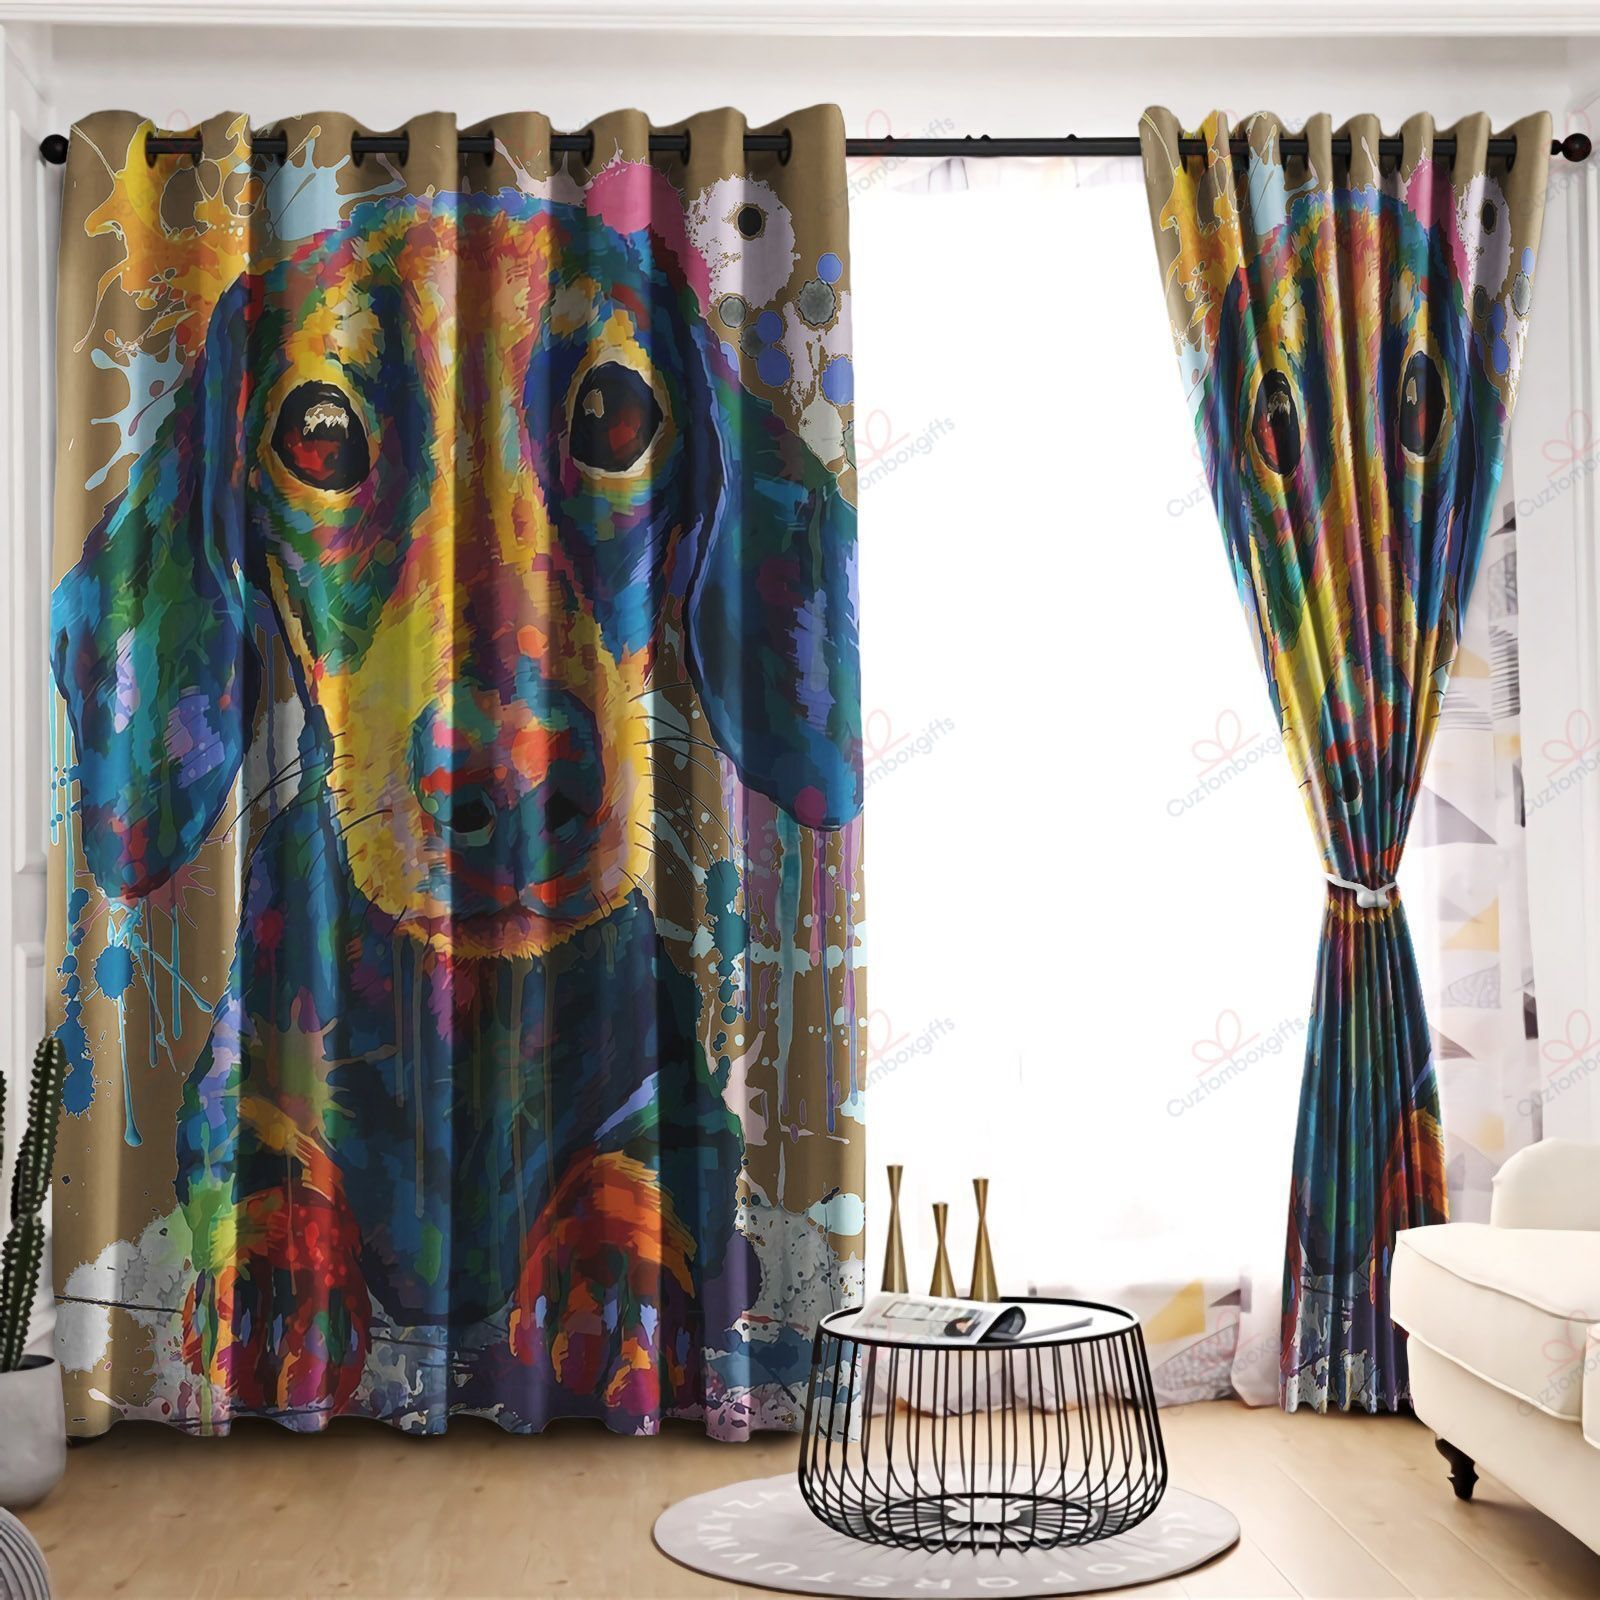 Colorful Art Dachshund Printed Window Curtains Home Decor